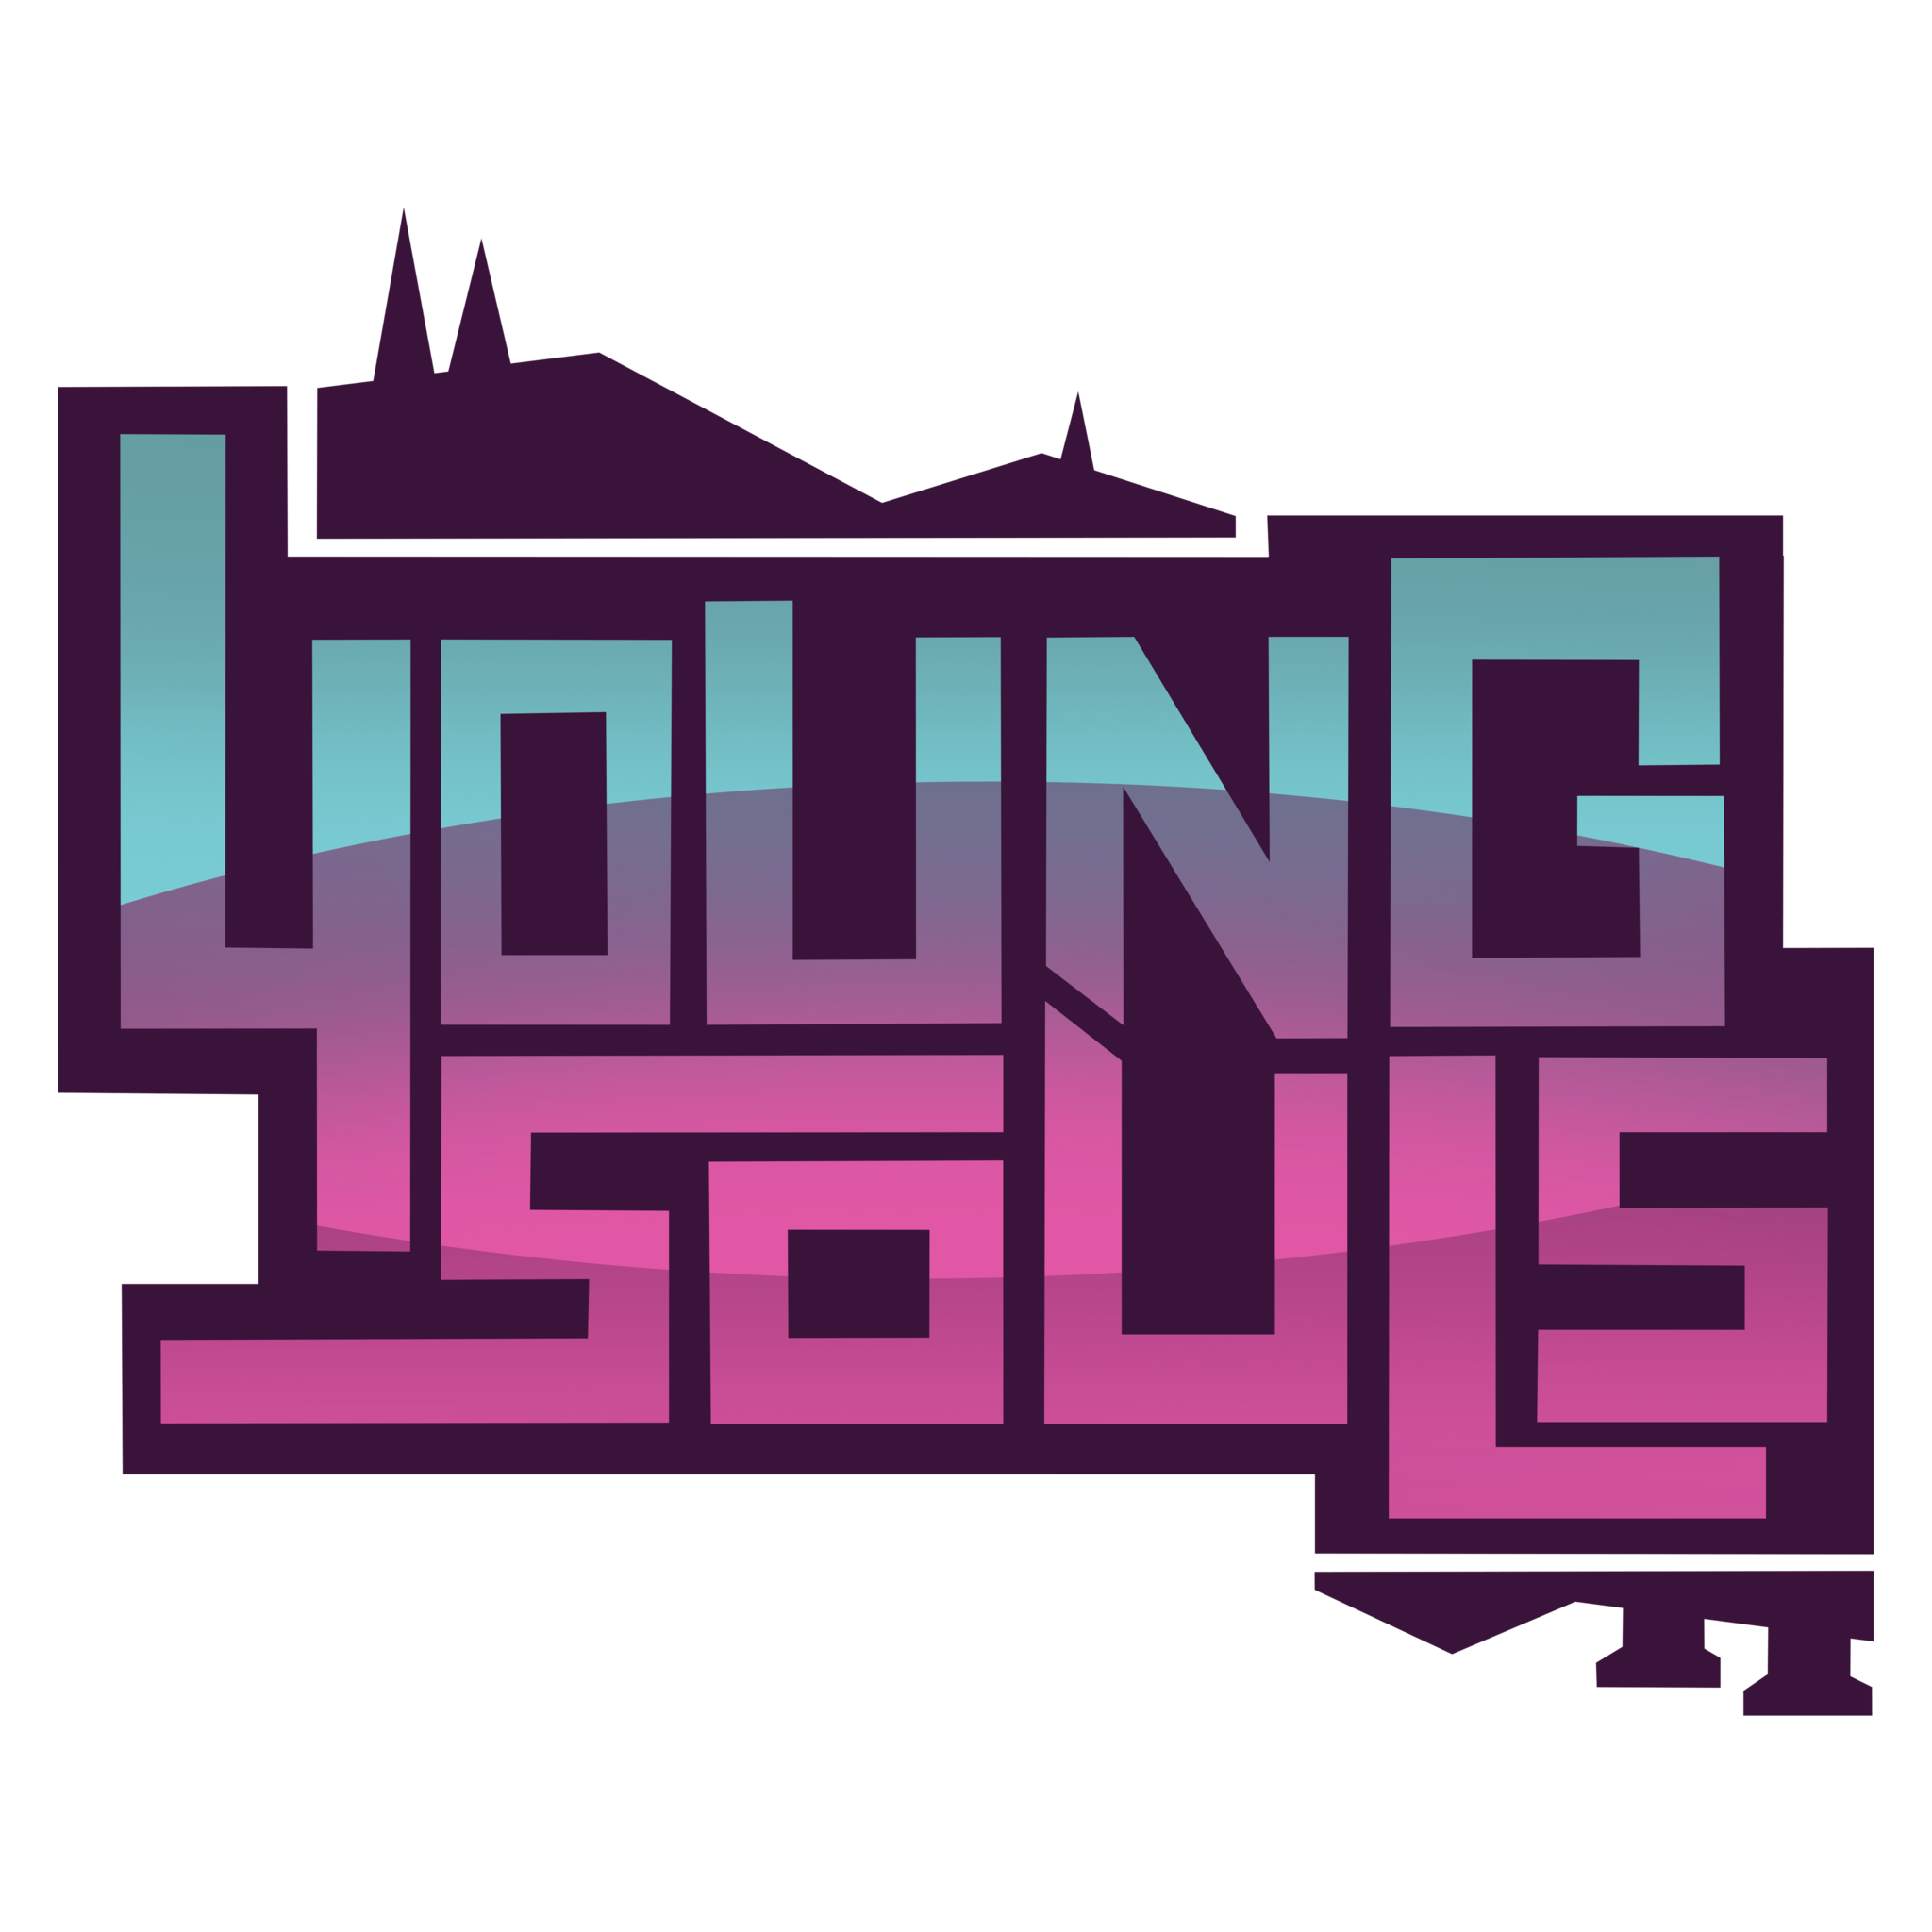 Young Souls Logo